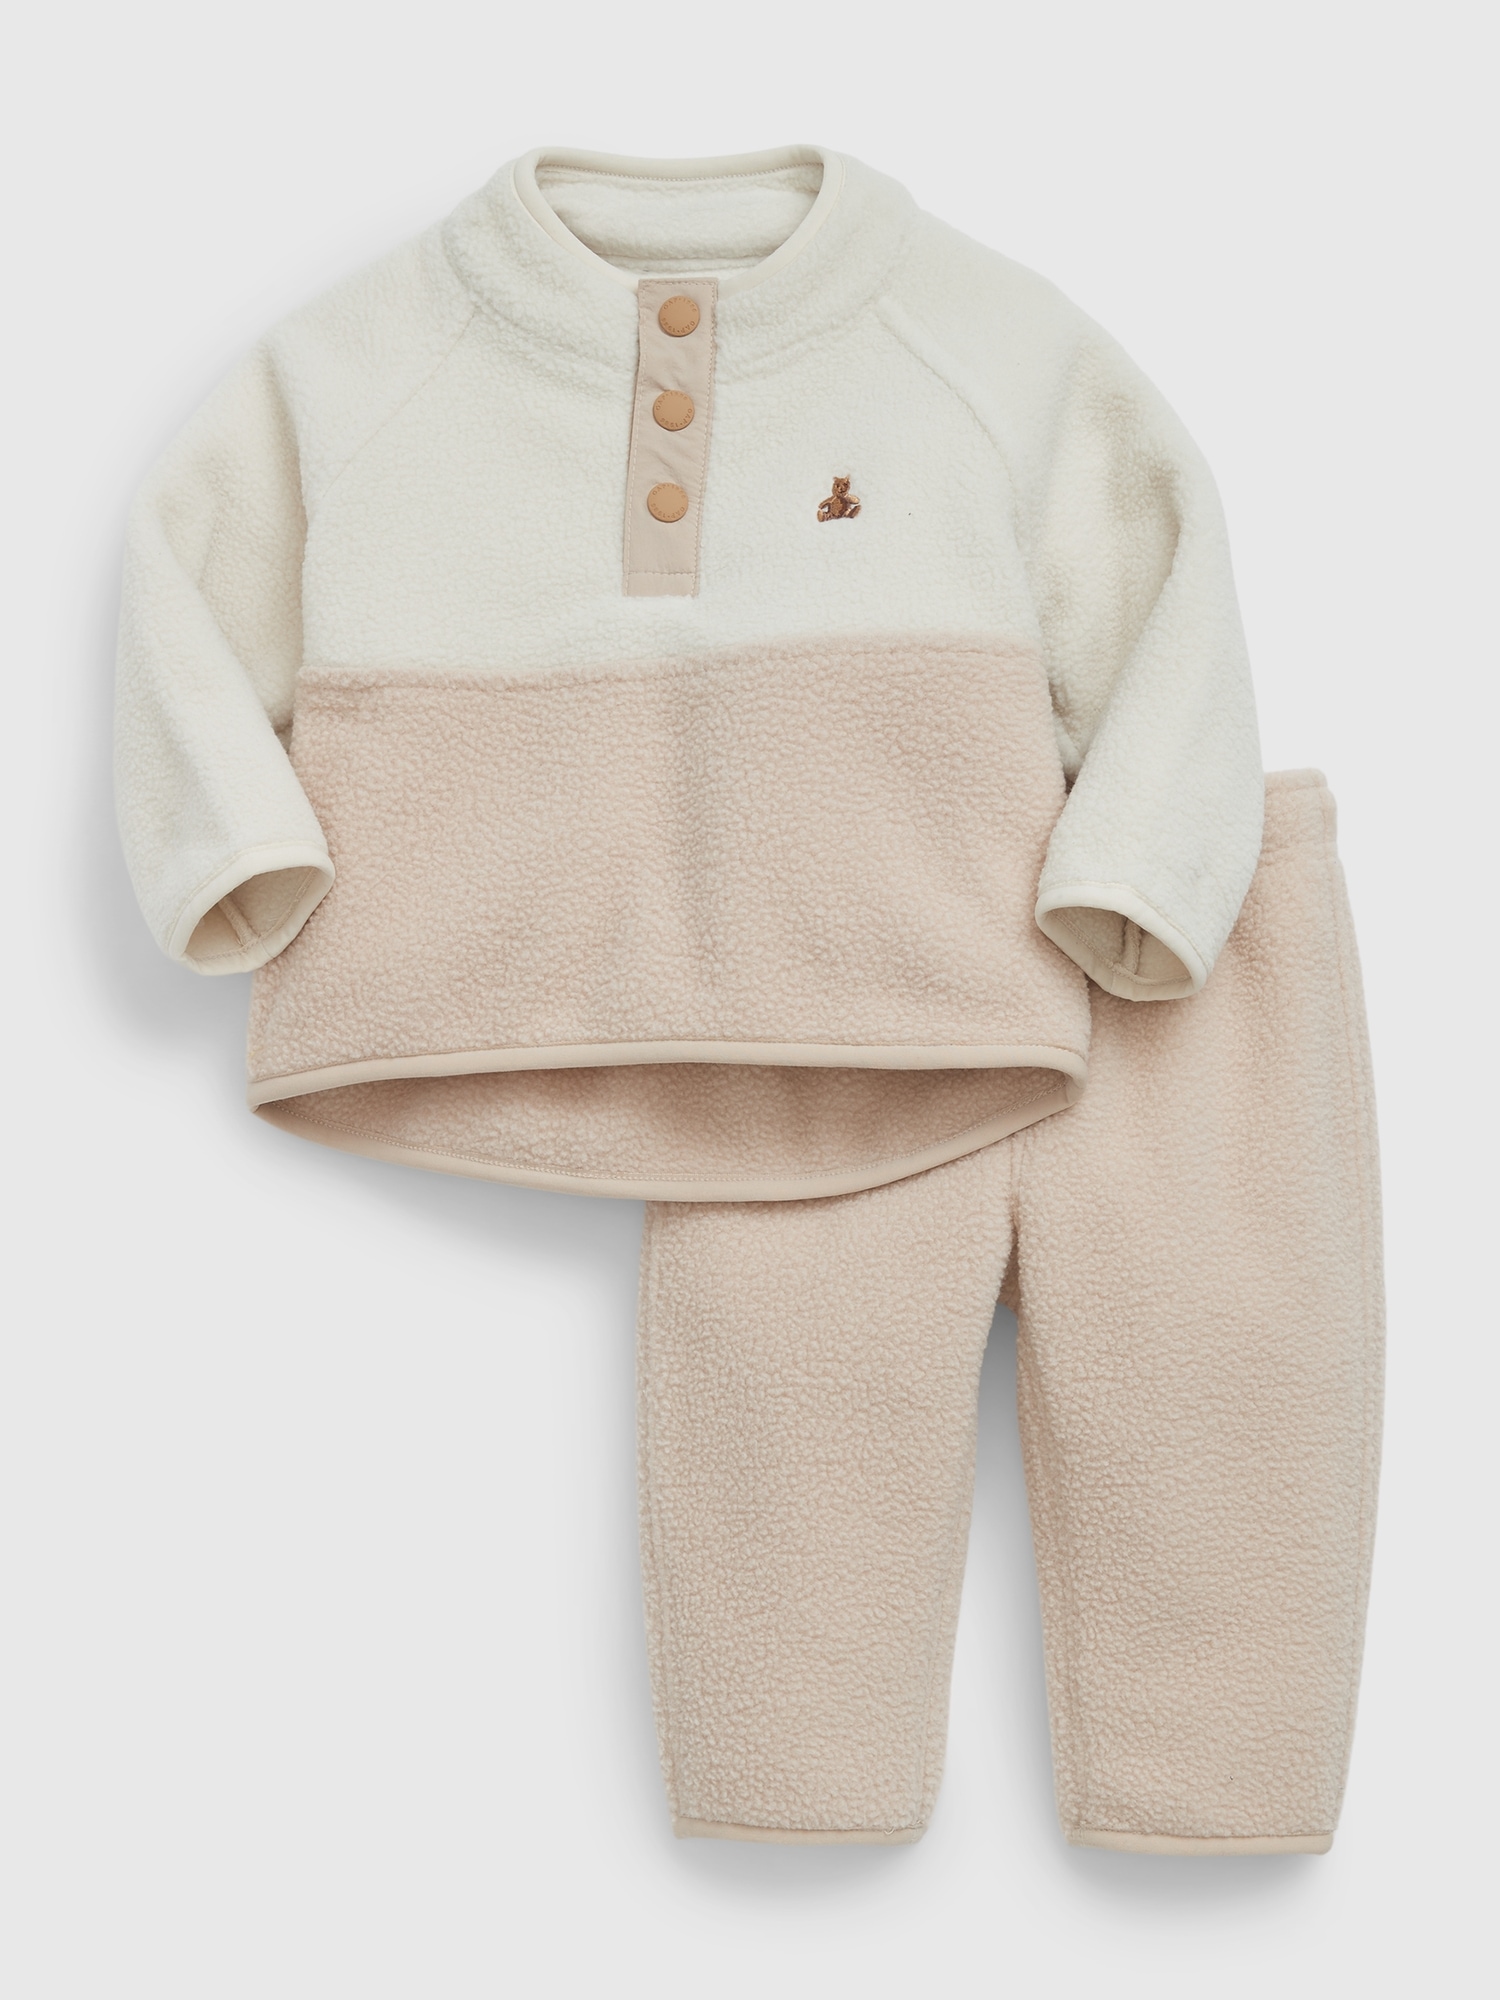 Gap Baby Arctic Fleece Outfit Set